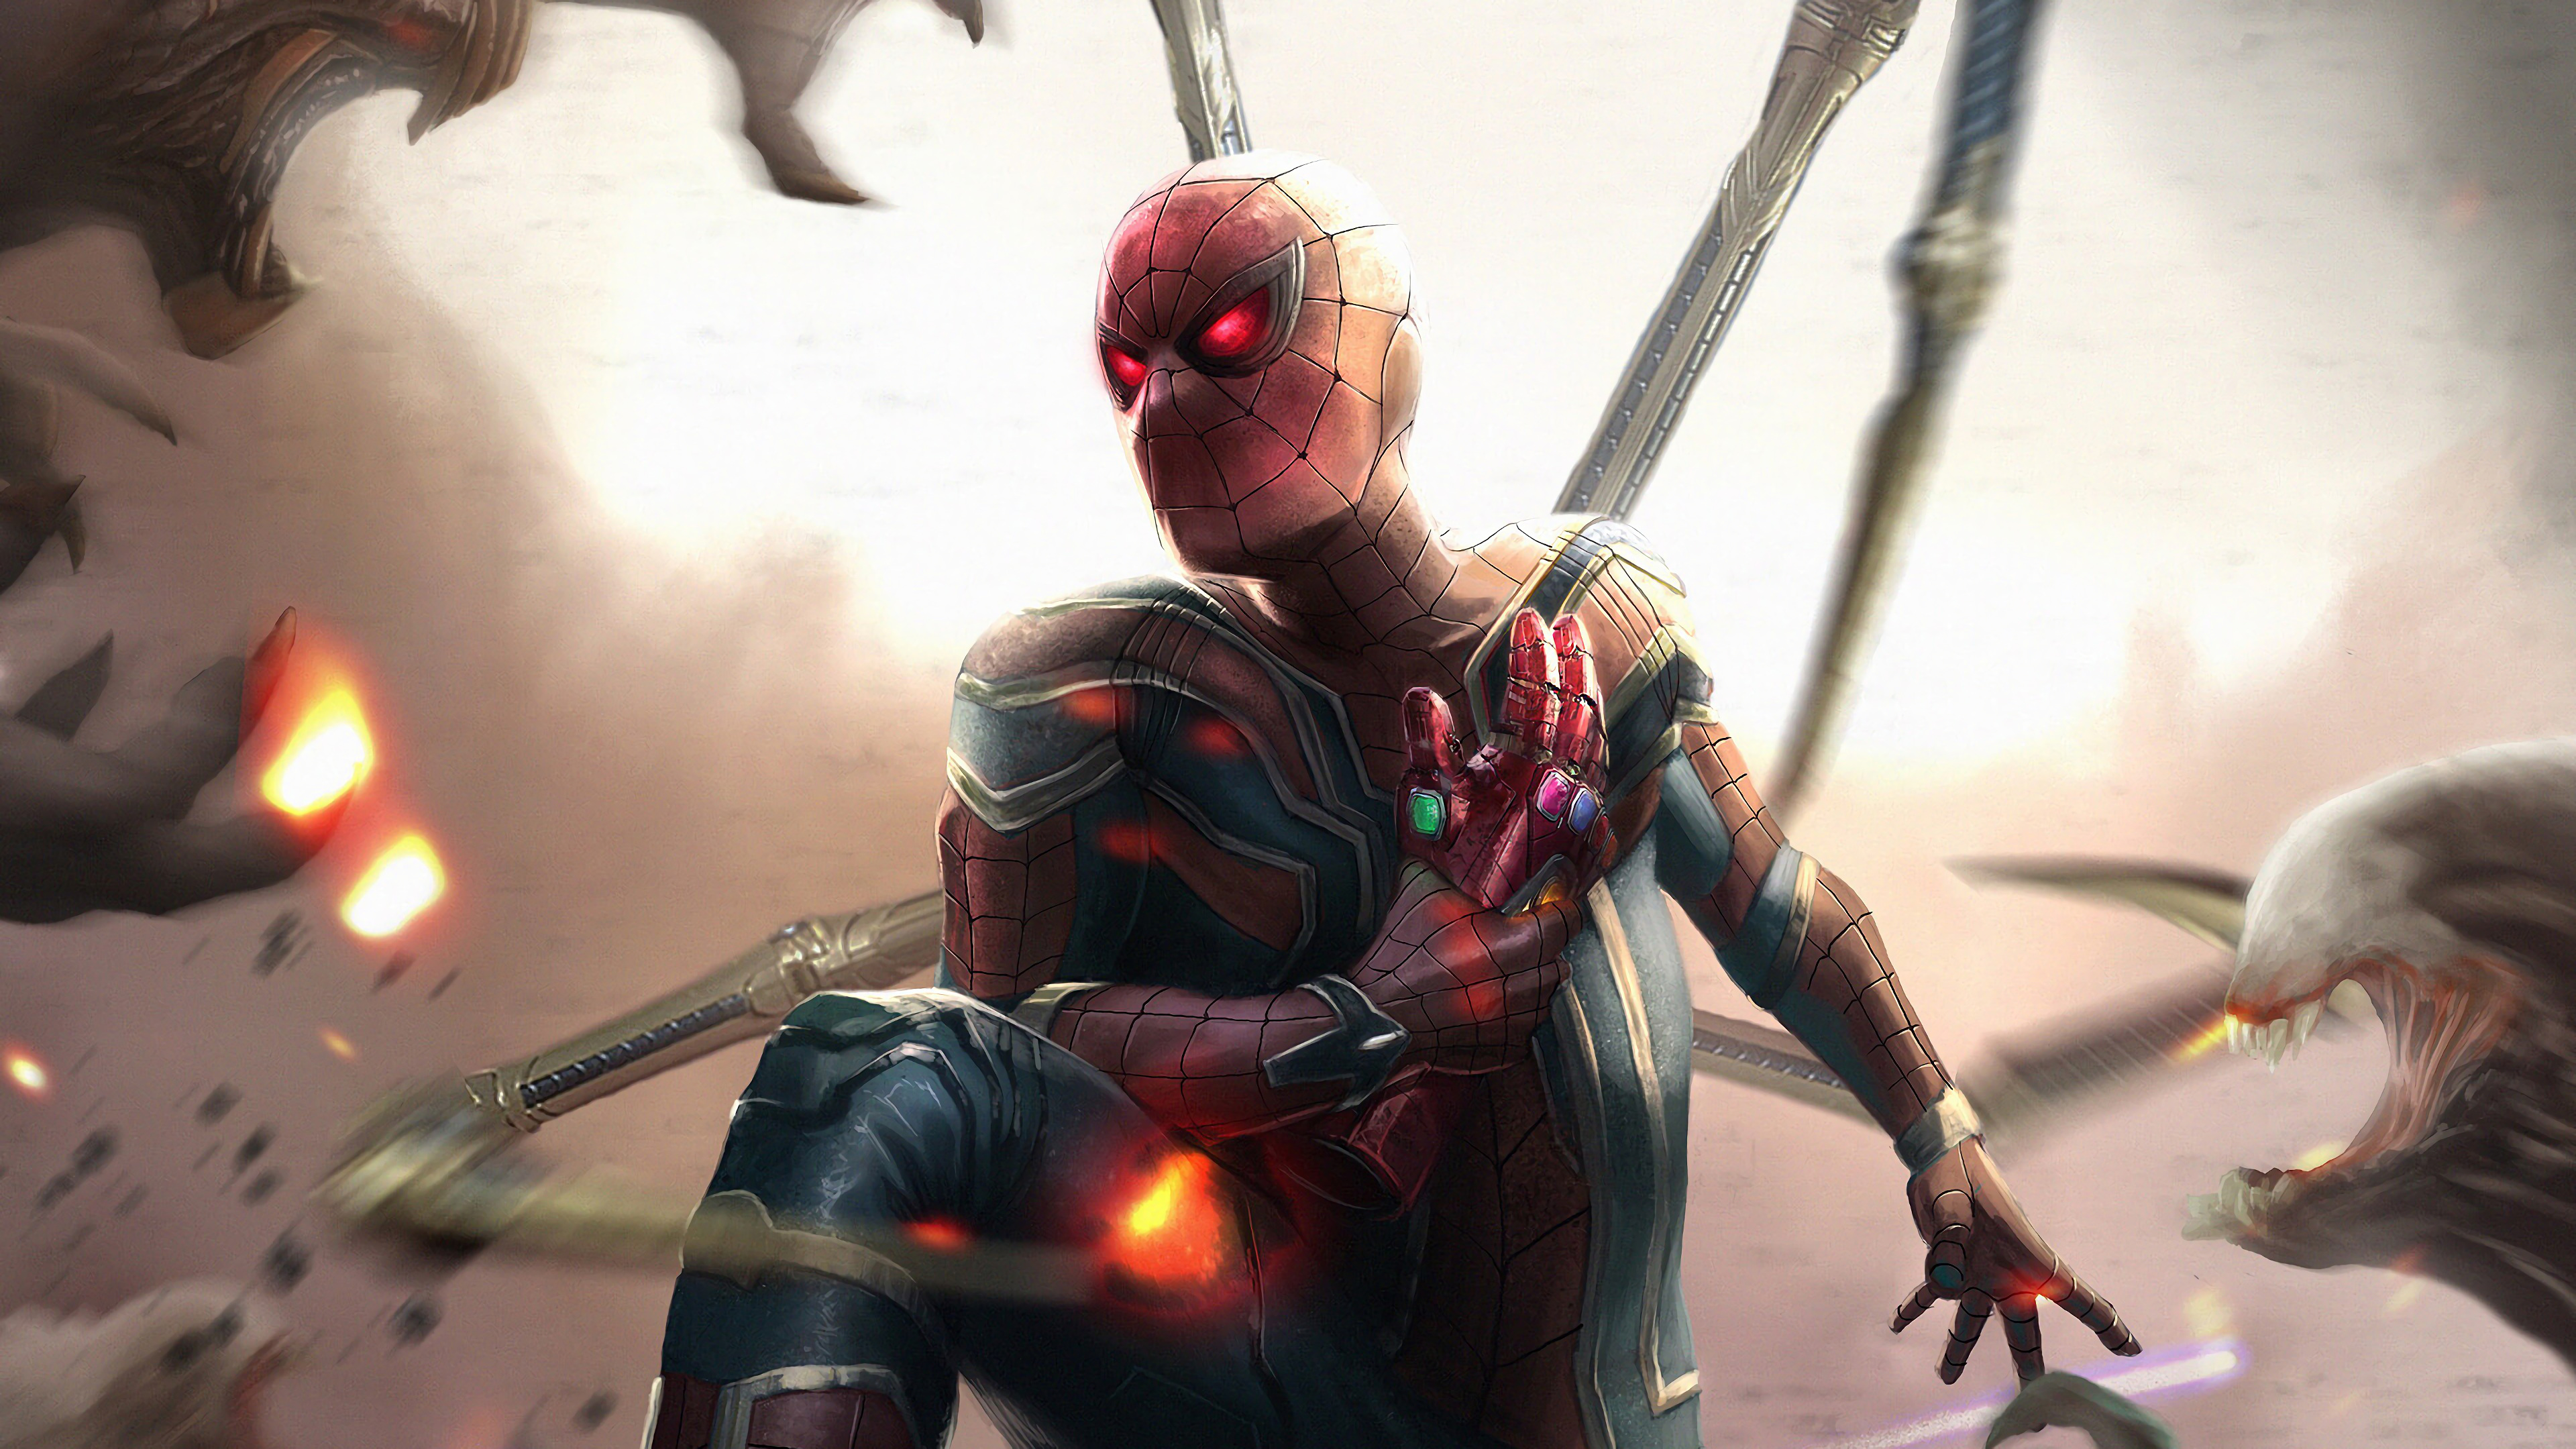 Spider Man, Instant Kill Mode, Infinity Stones, Avengers